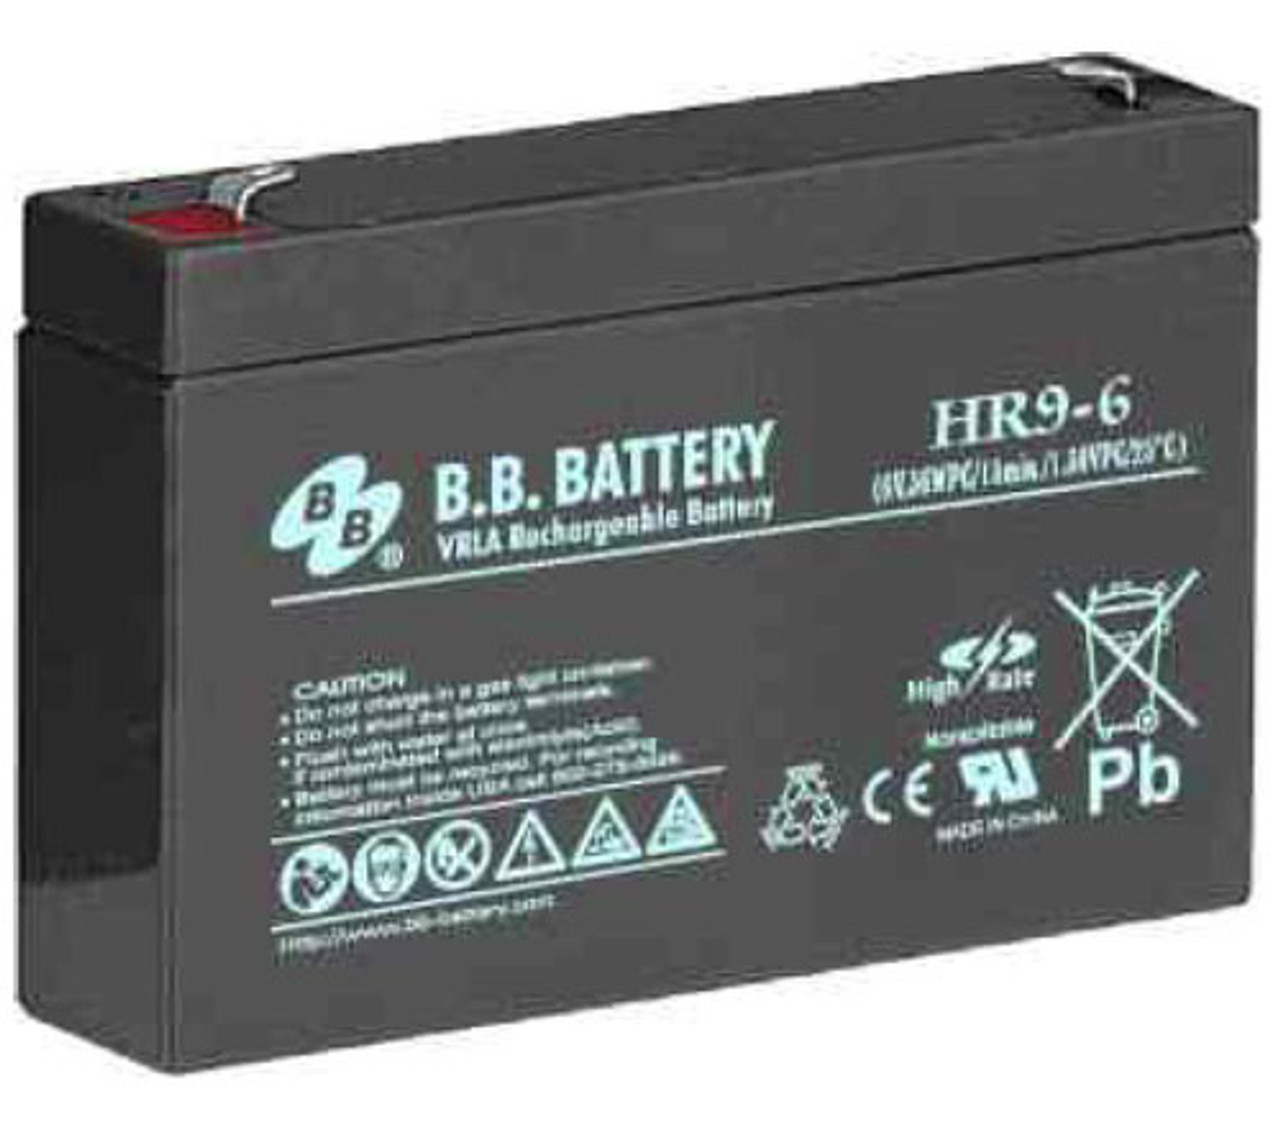 HR9-6 - B.B. Battery 6V/8Ah High Rate Sealed Lead Acid Battery w/ F2  Terminals